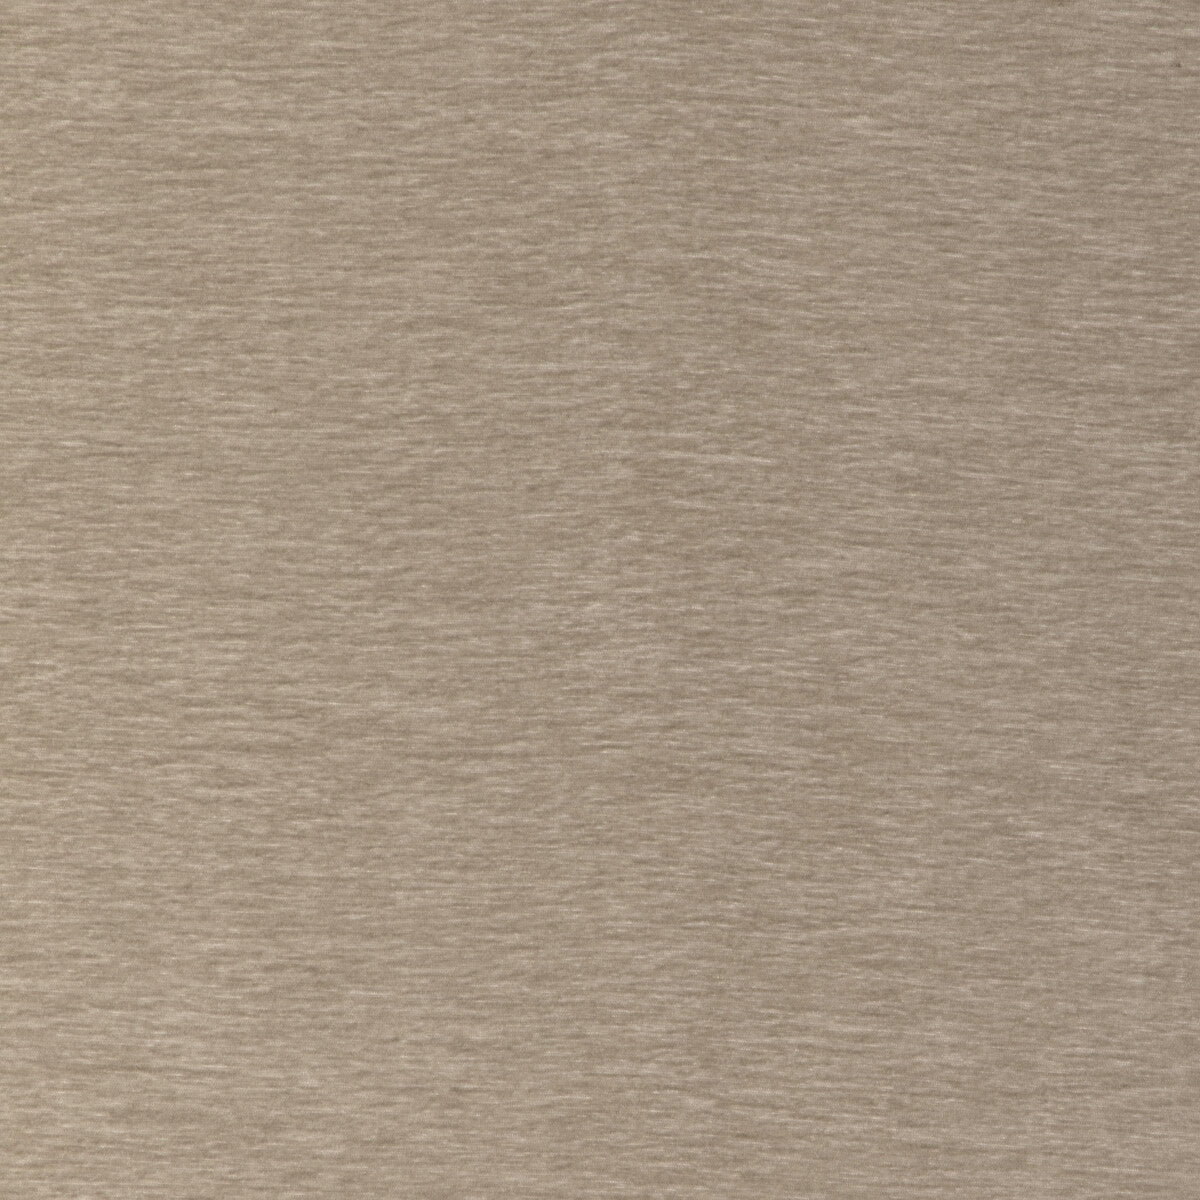 Kravet Smart fabric in 36662-1611 color - pattern 36662.1611.0 - by Kravet Smart in the Performance Kravetarmor collection